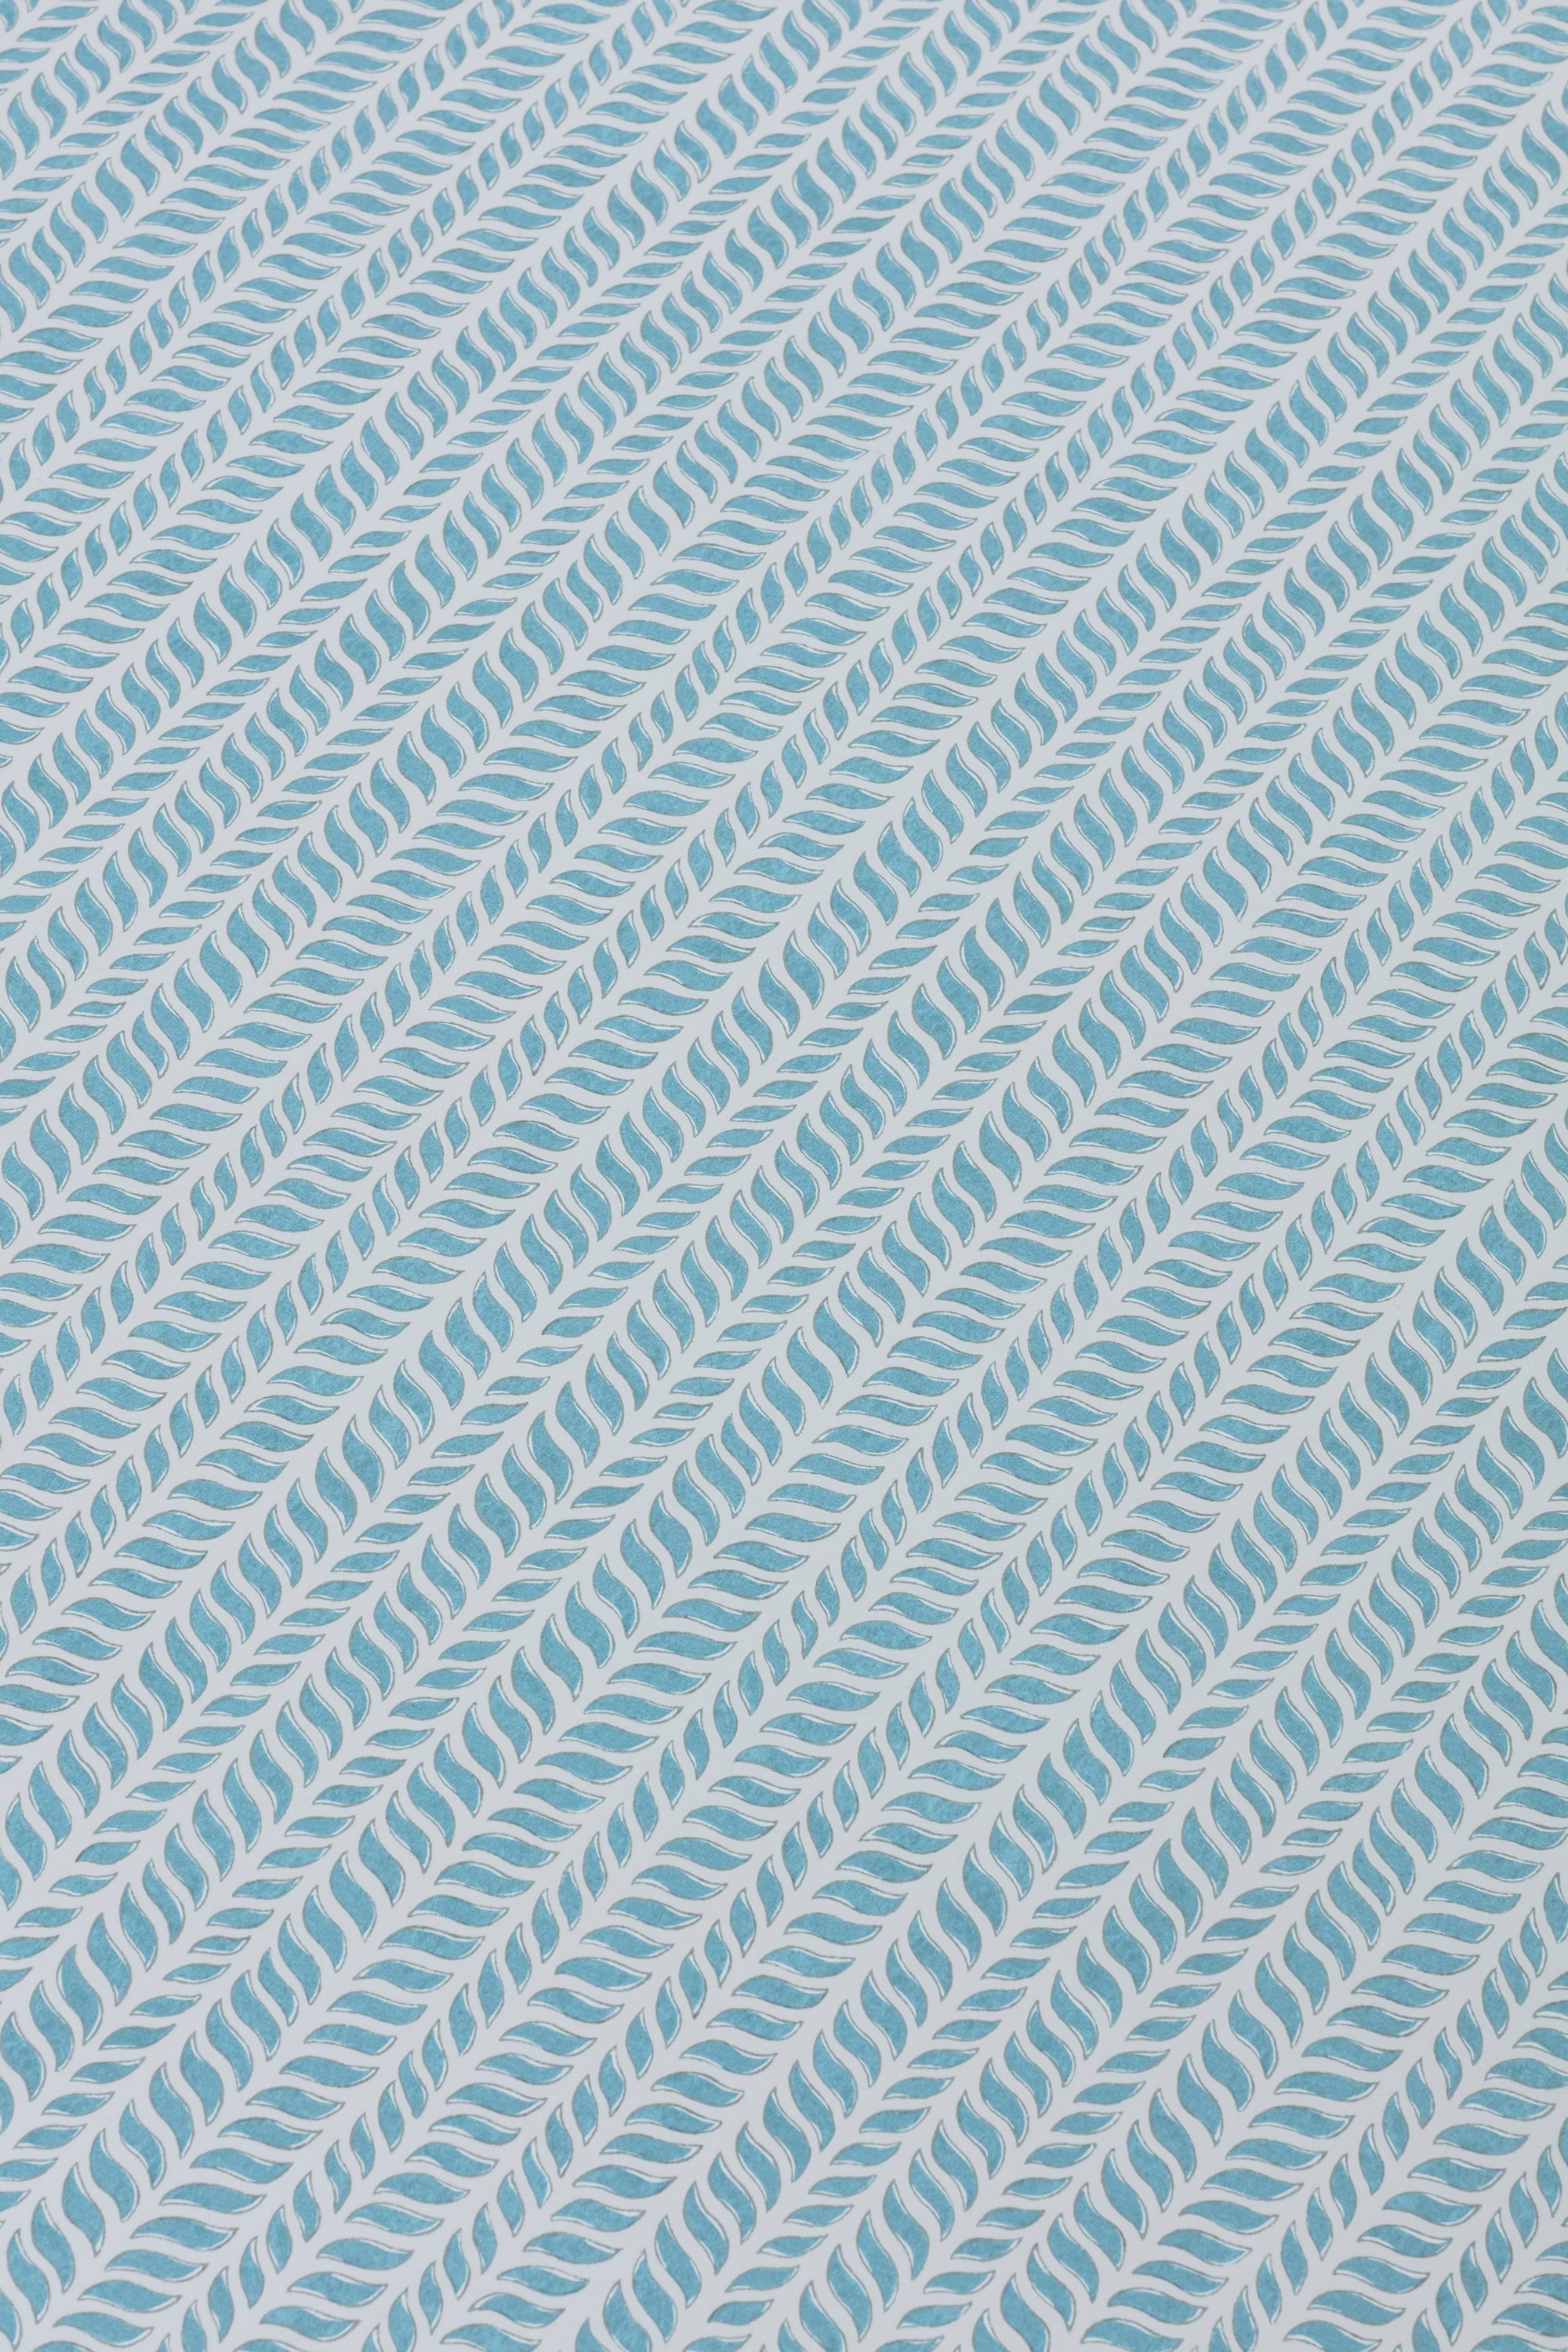 Detail of a wallpaper panel in a painterly herringbone print in sky blue on a light blue field.